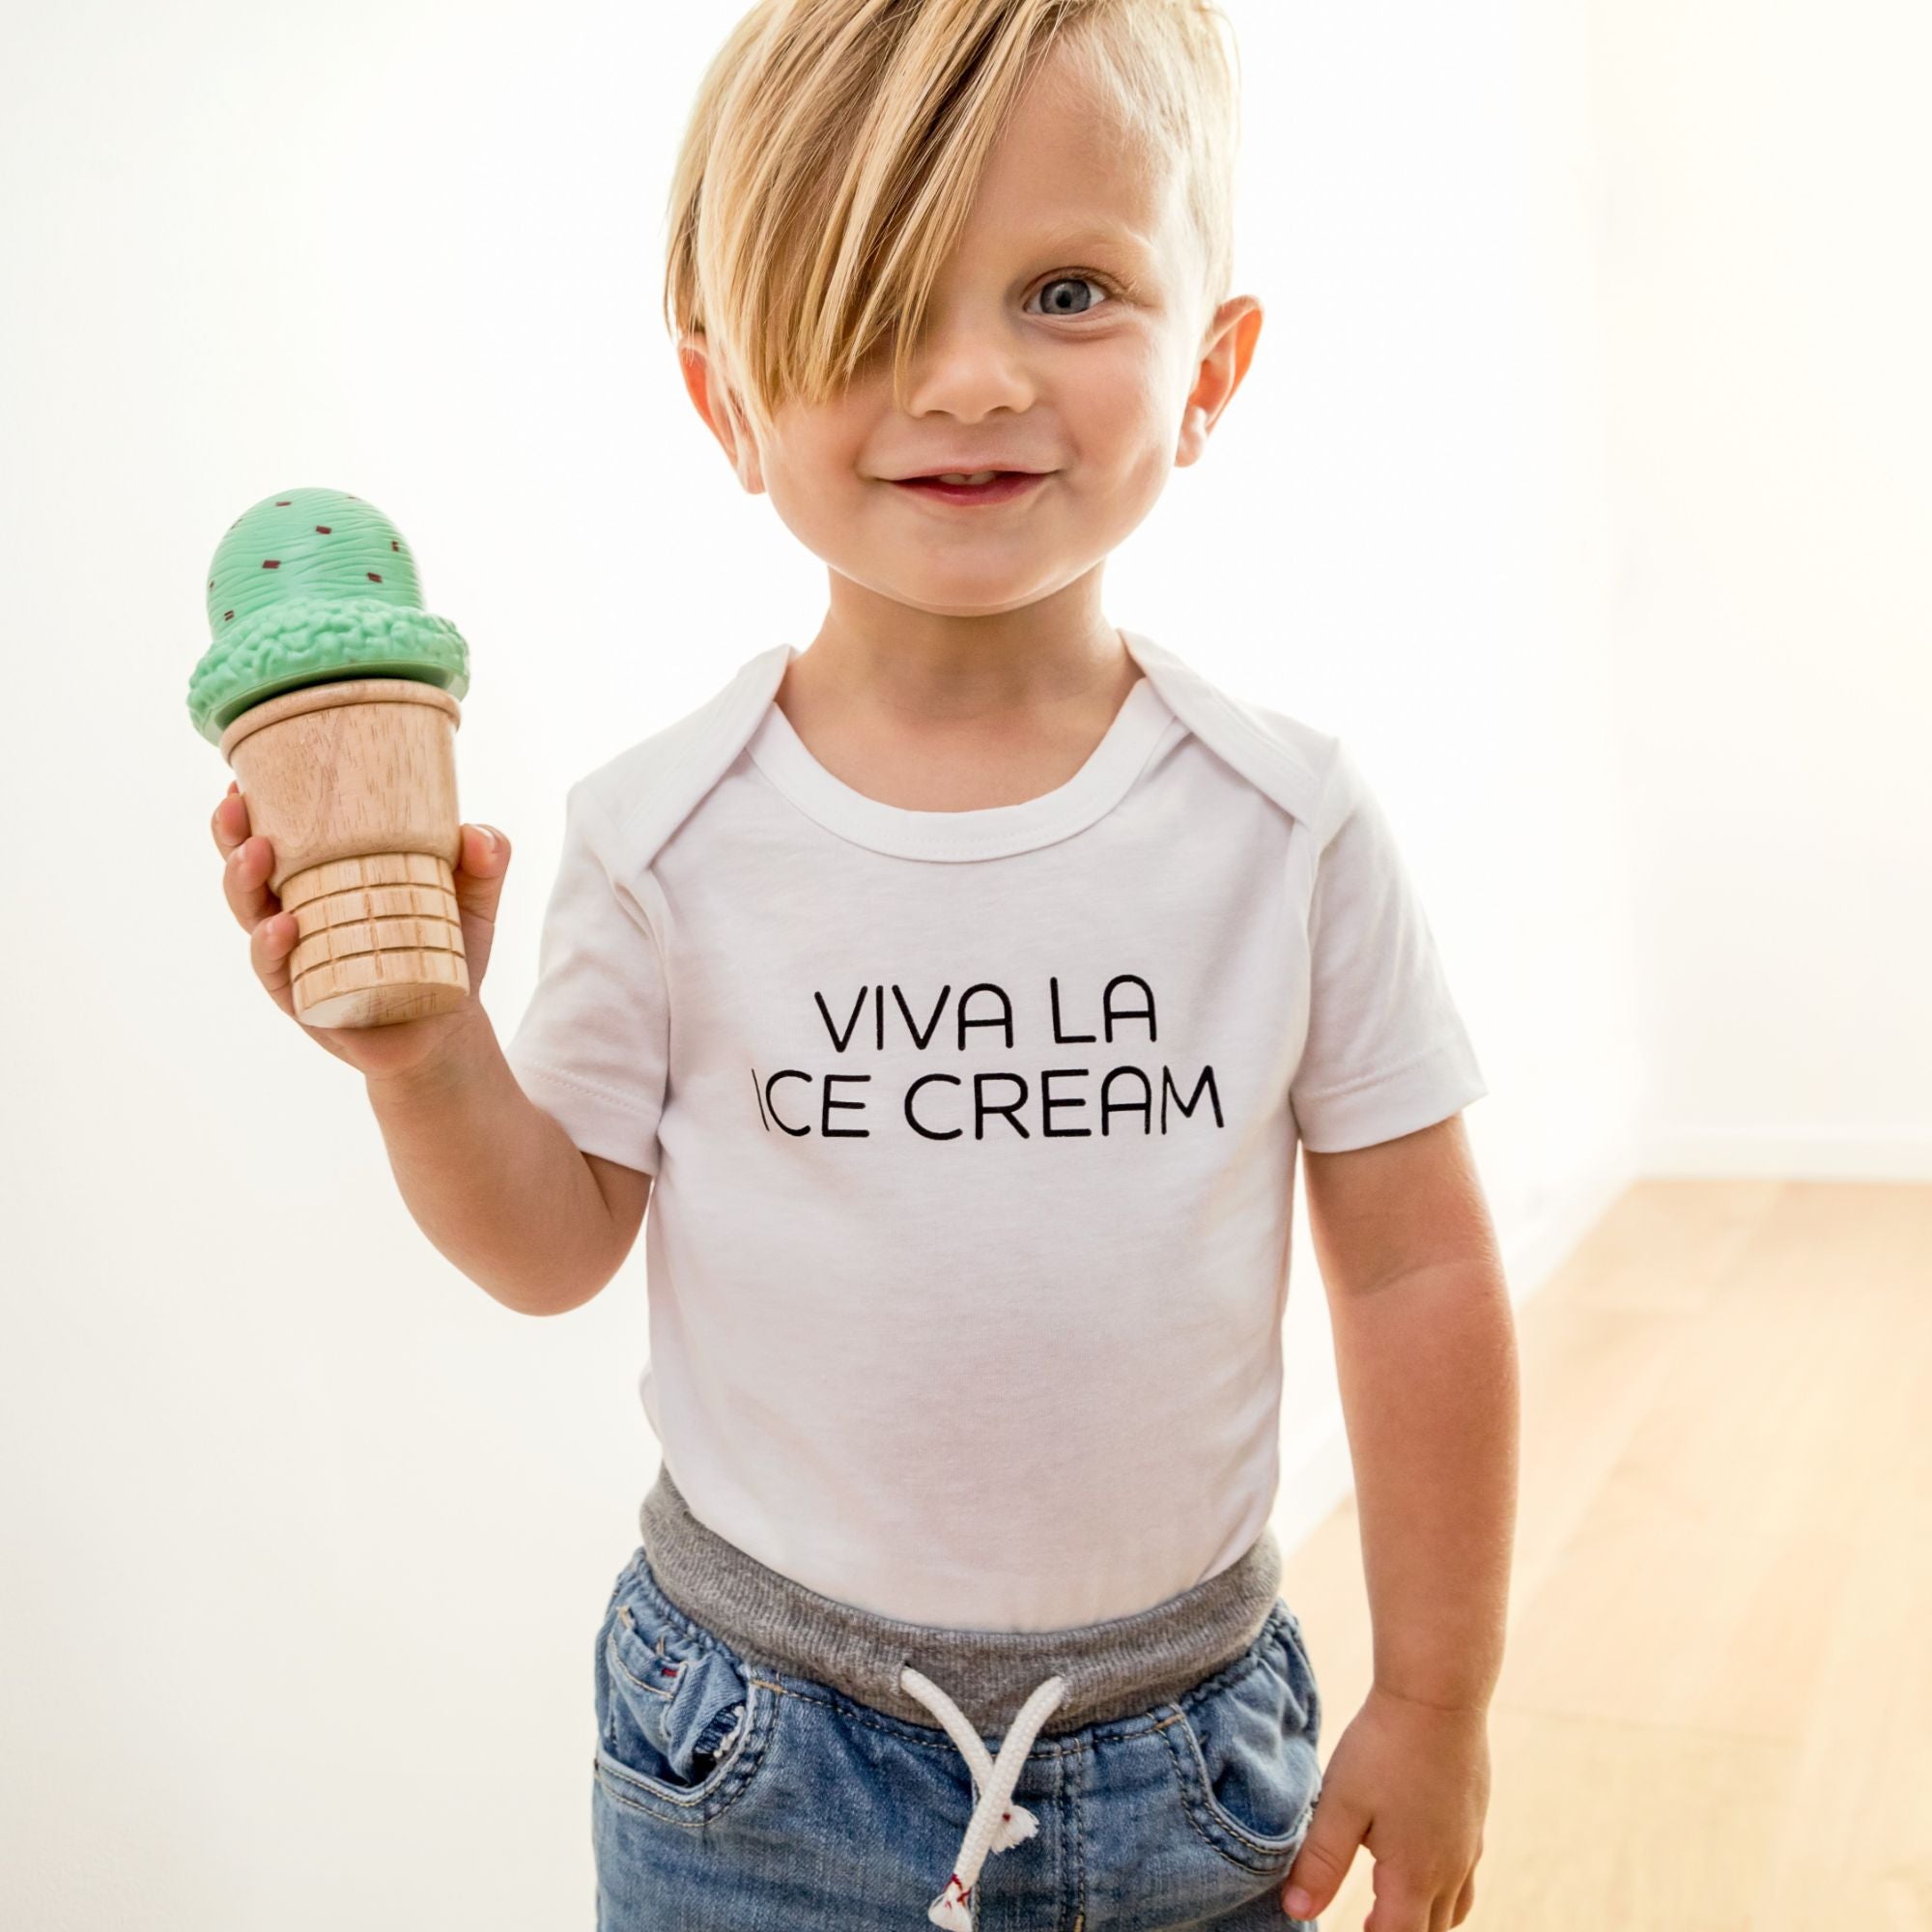 Viva La Ice Cream